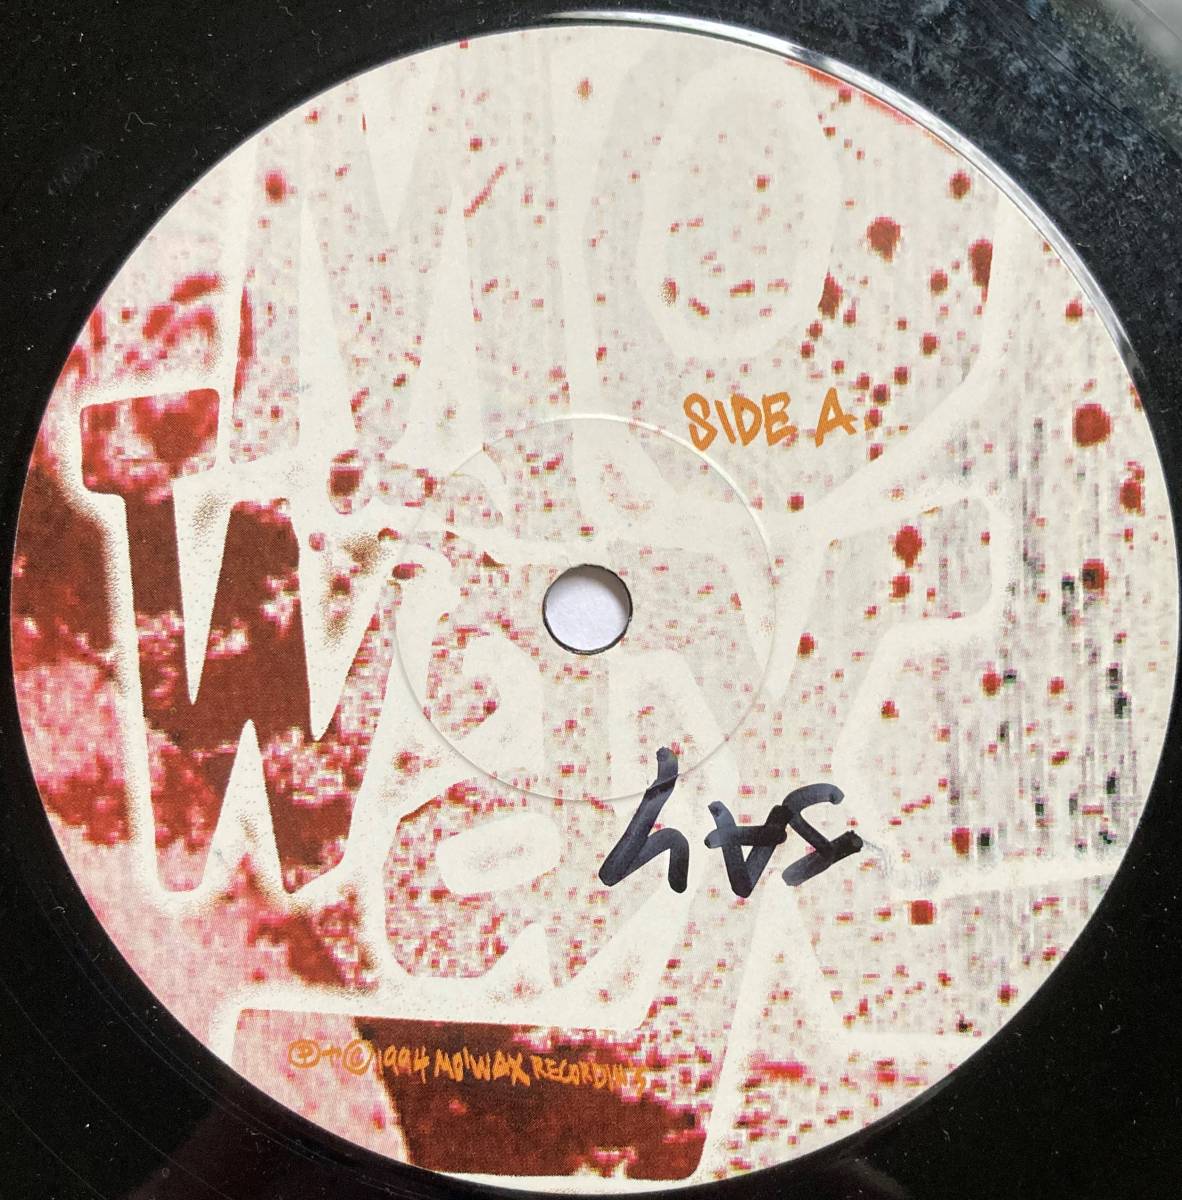  rare![2×12]U.N.K.L.E. / The Time Has Come E.P.#Mo Wax, mowax #unkle#Futura 2000 #Portishead remix / Plaid/ Howie B.